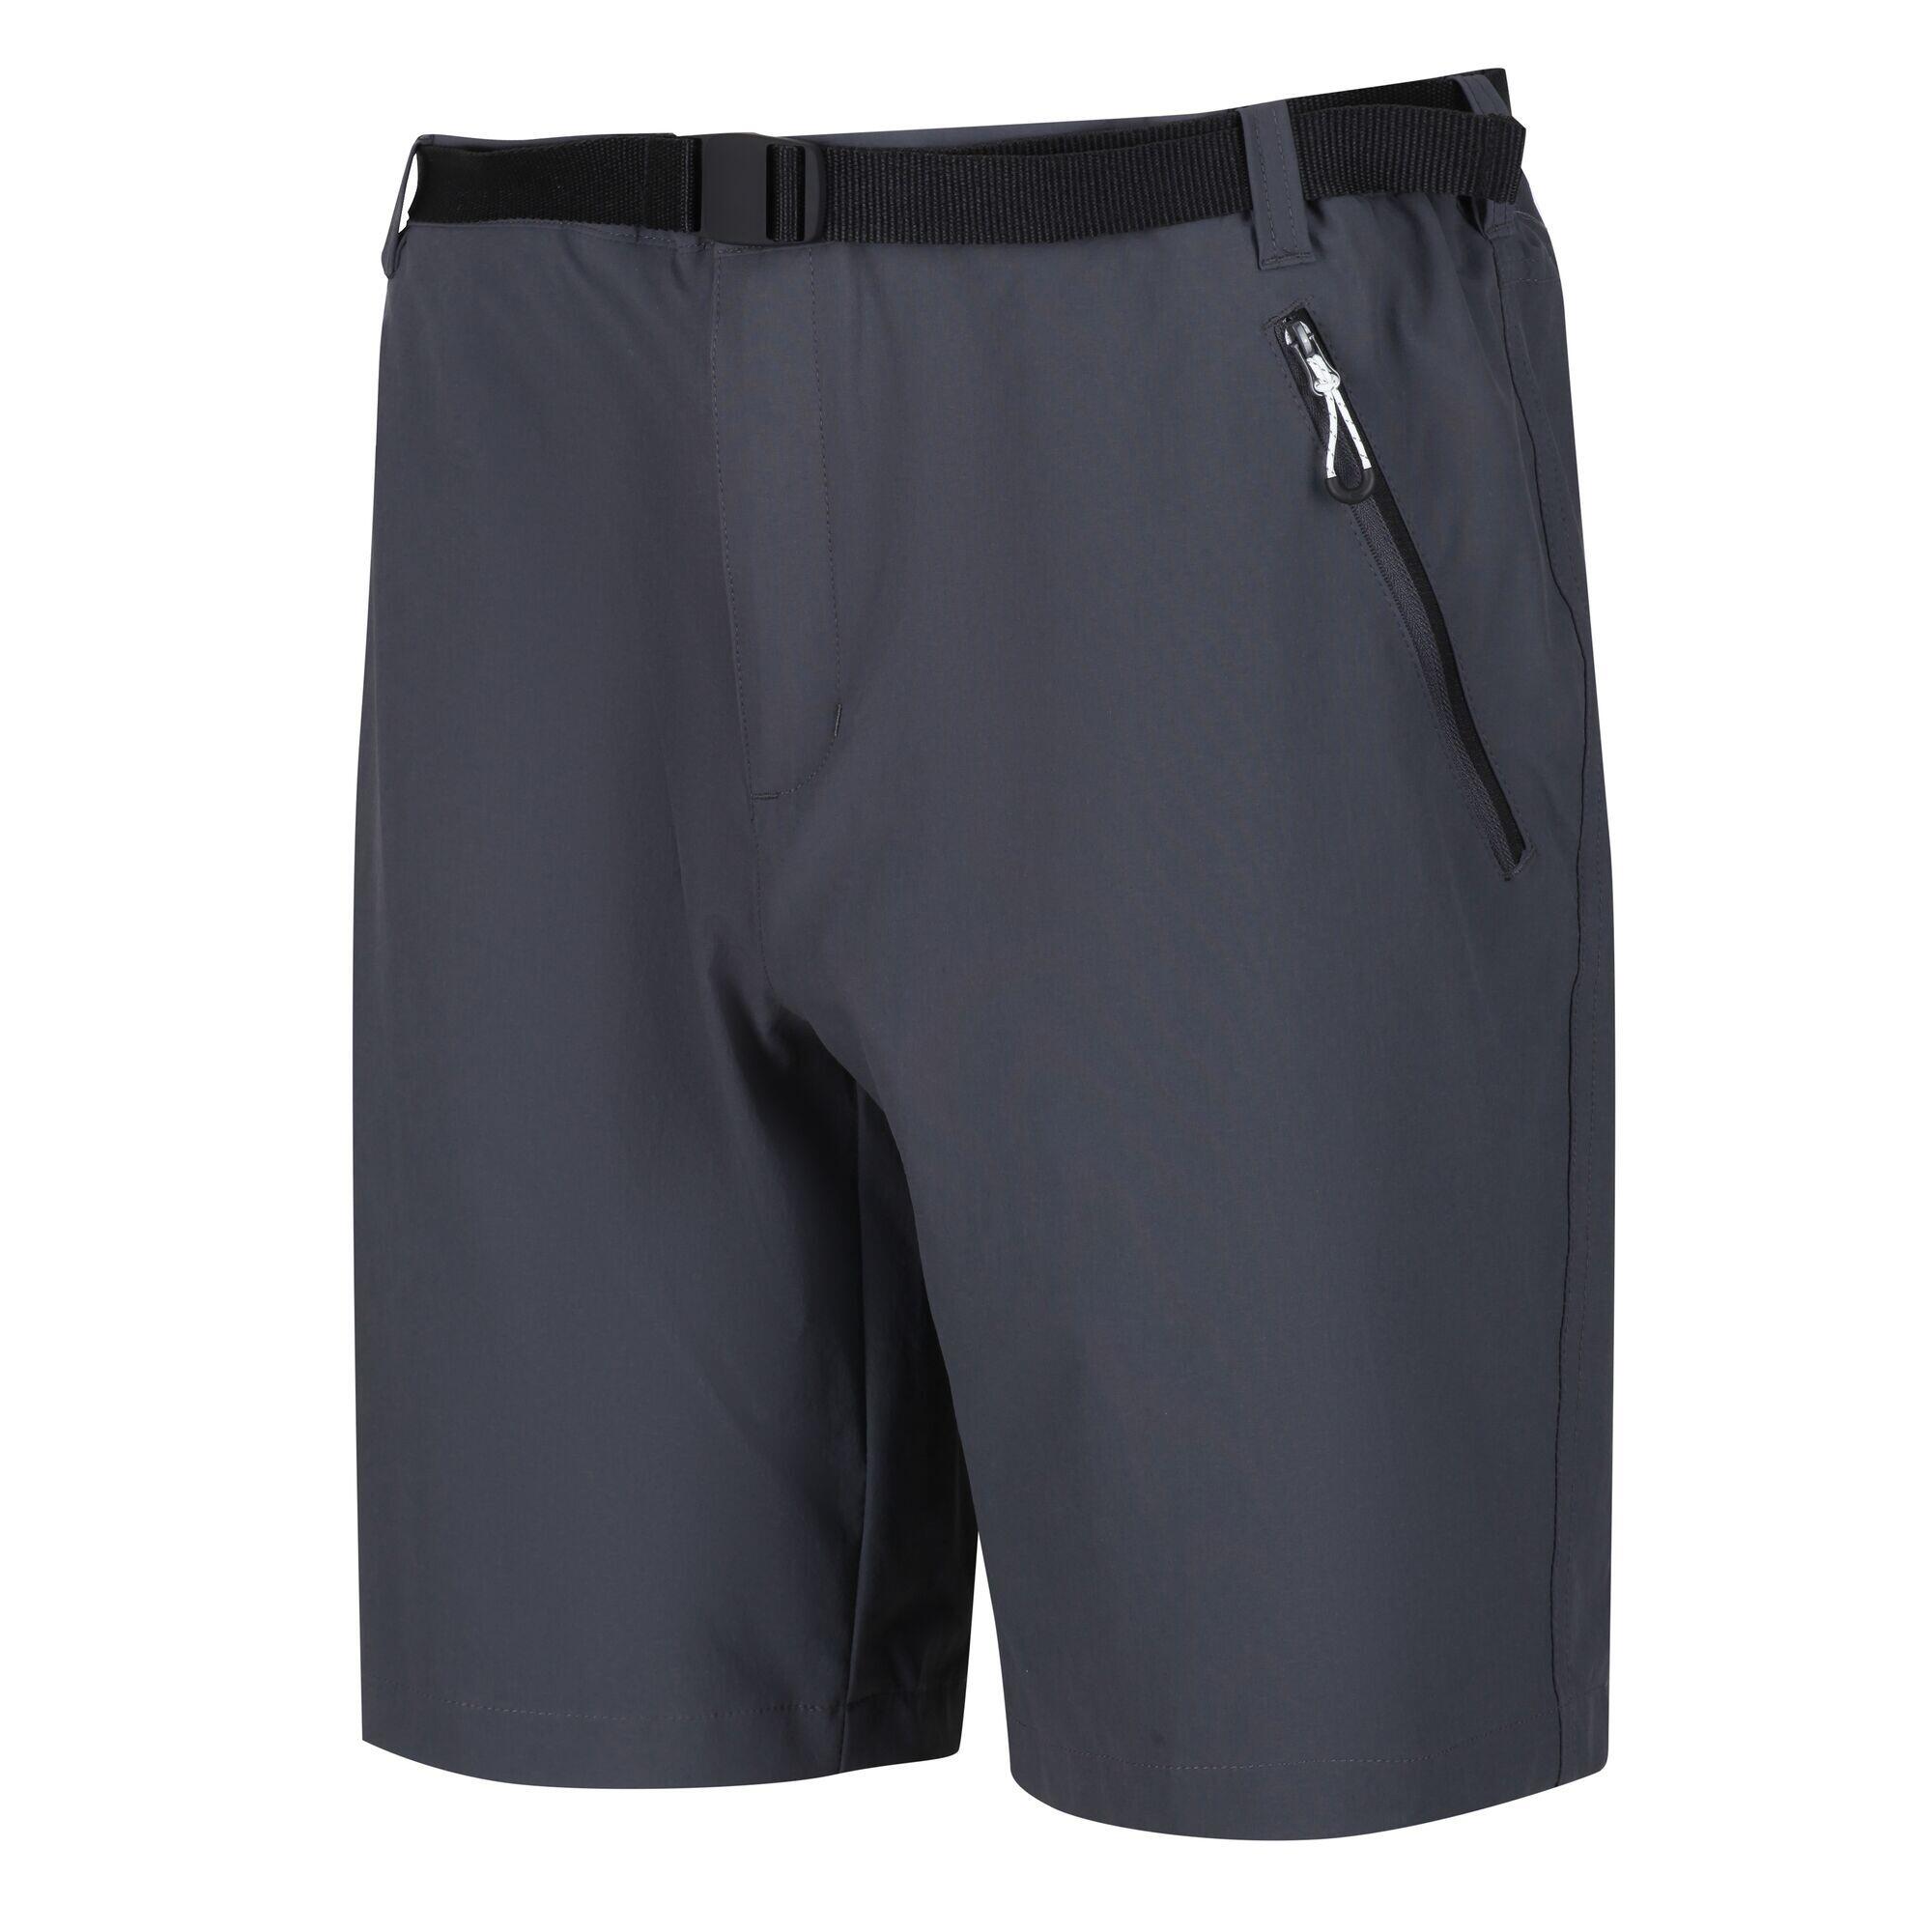 Xert III Men's Hiking Shorts - Mid Grey 7/7